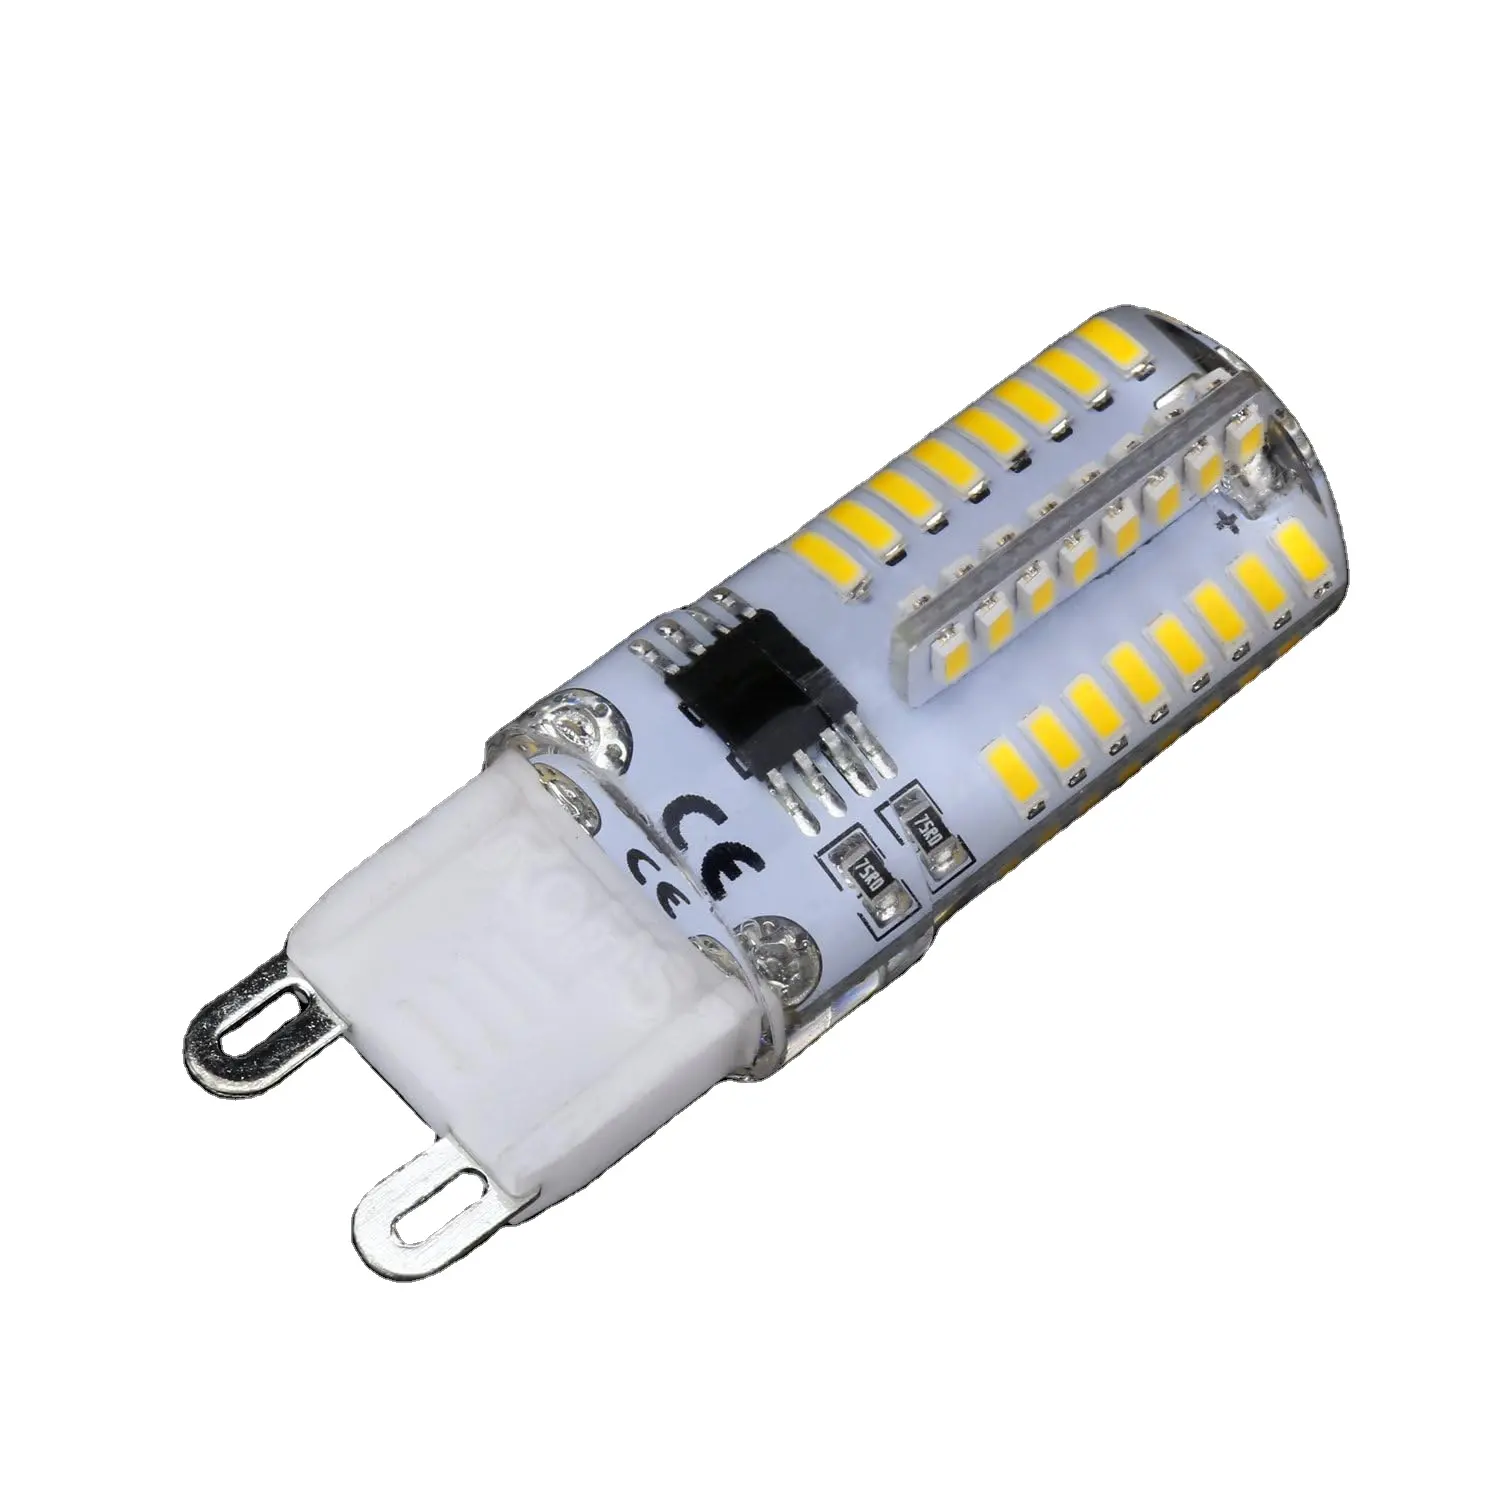 SHENPU lampu pijar LED dasar Pin G9, 6 pak 120V 230V AC SMD dapat diredupkan